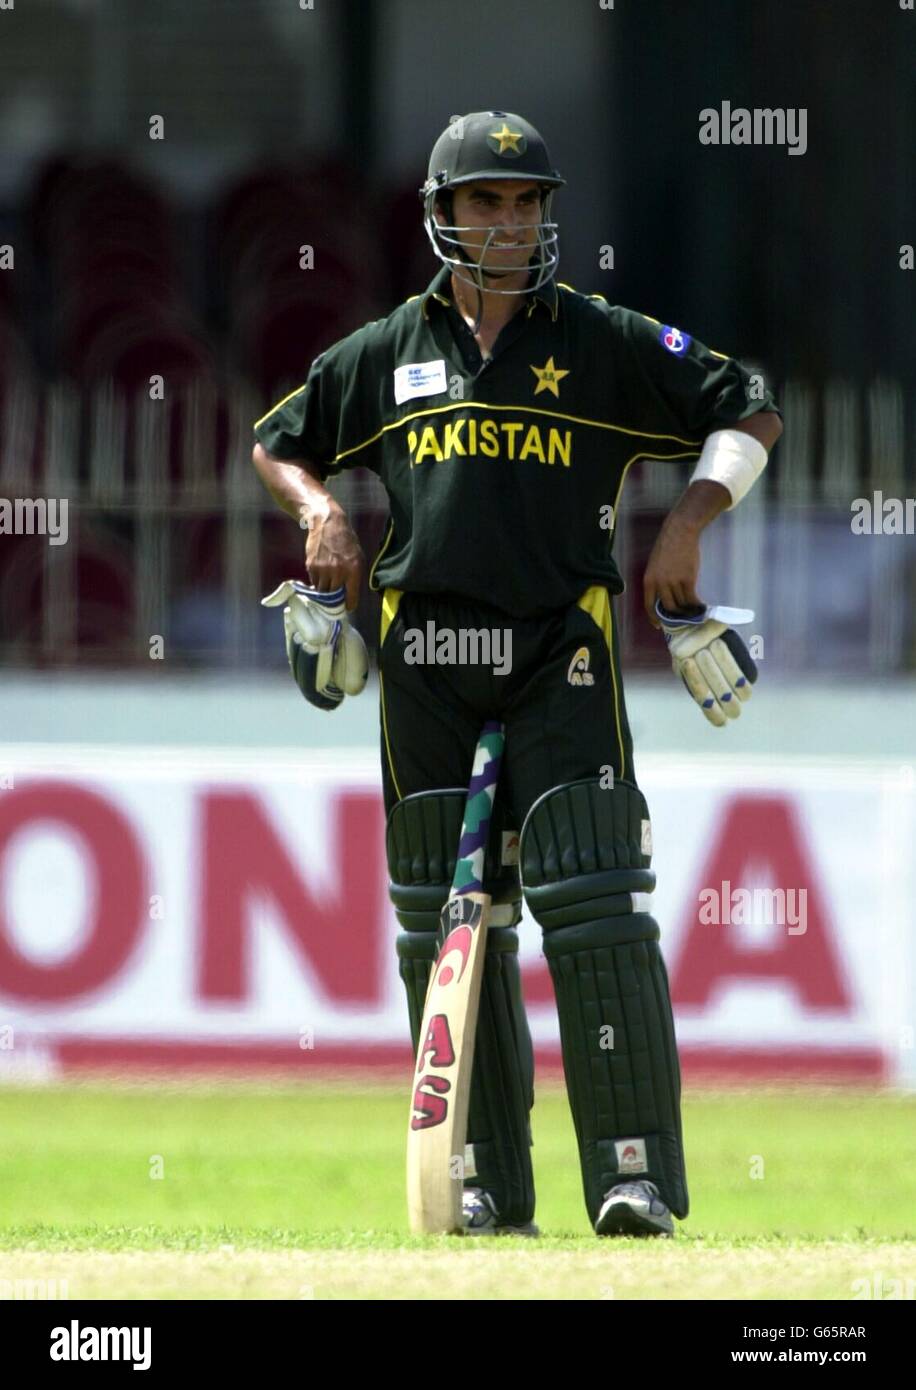 Imran Nazir - Pakistan. Imran Nazir of Pakistan in action at the ICC Trophy tournament held in Colombo, Sri Lanka 2002. Stock Photo